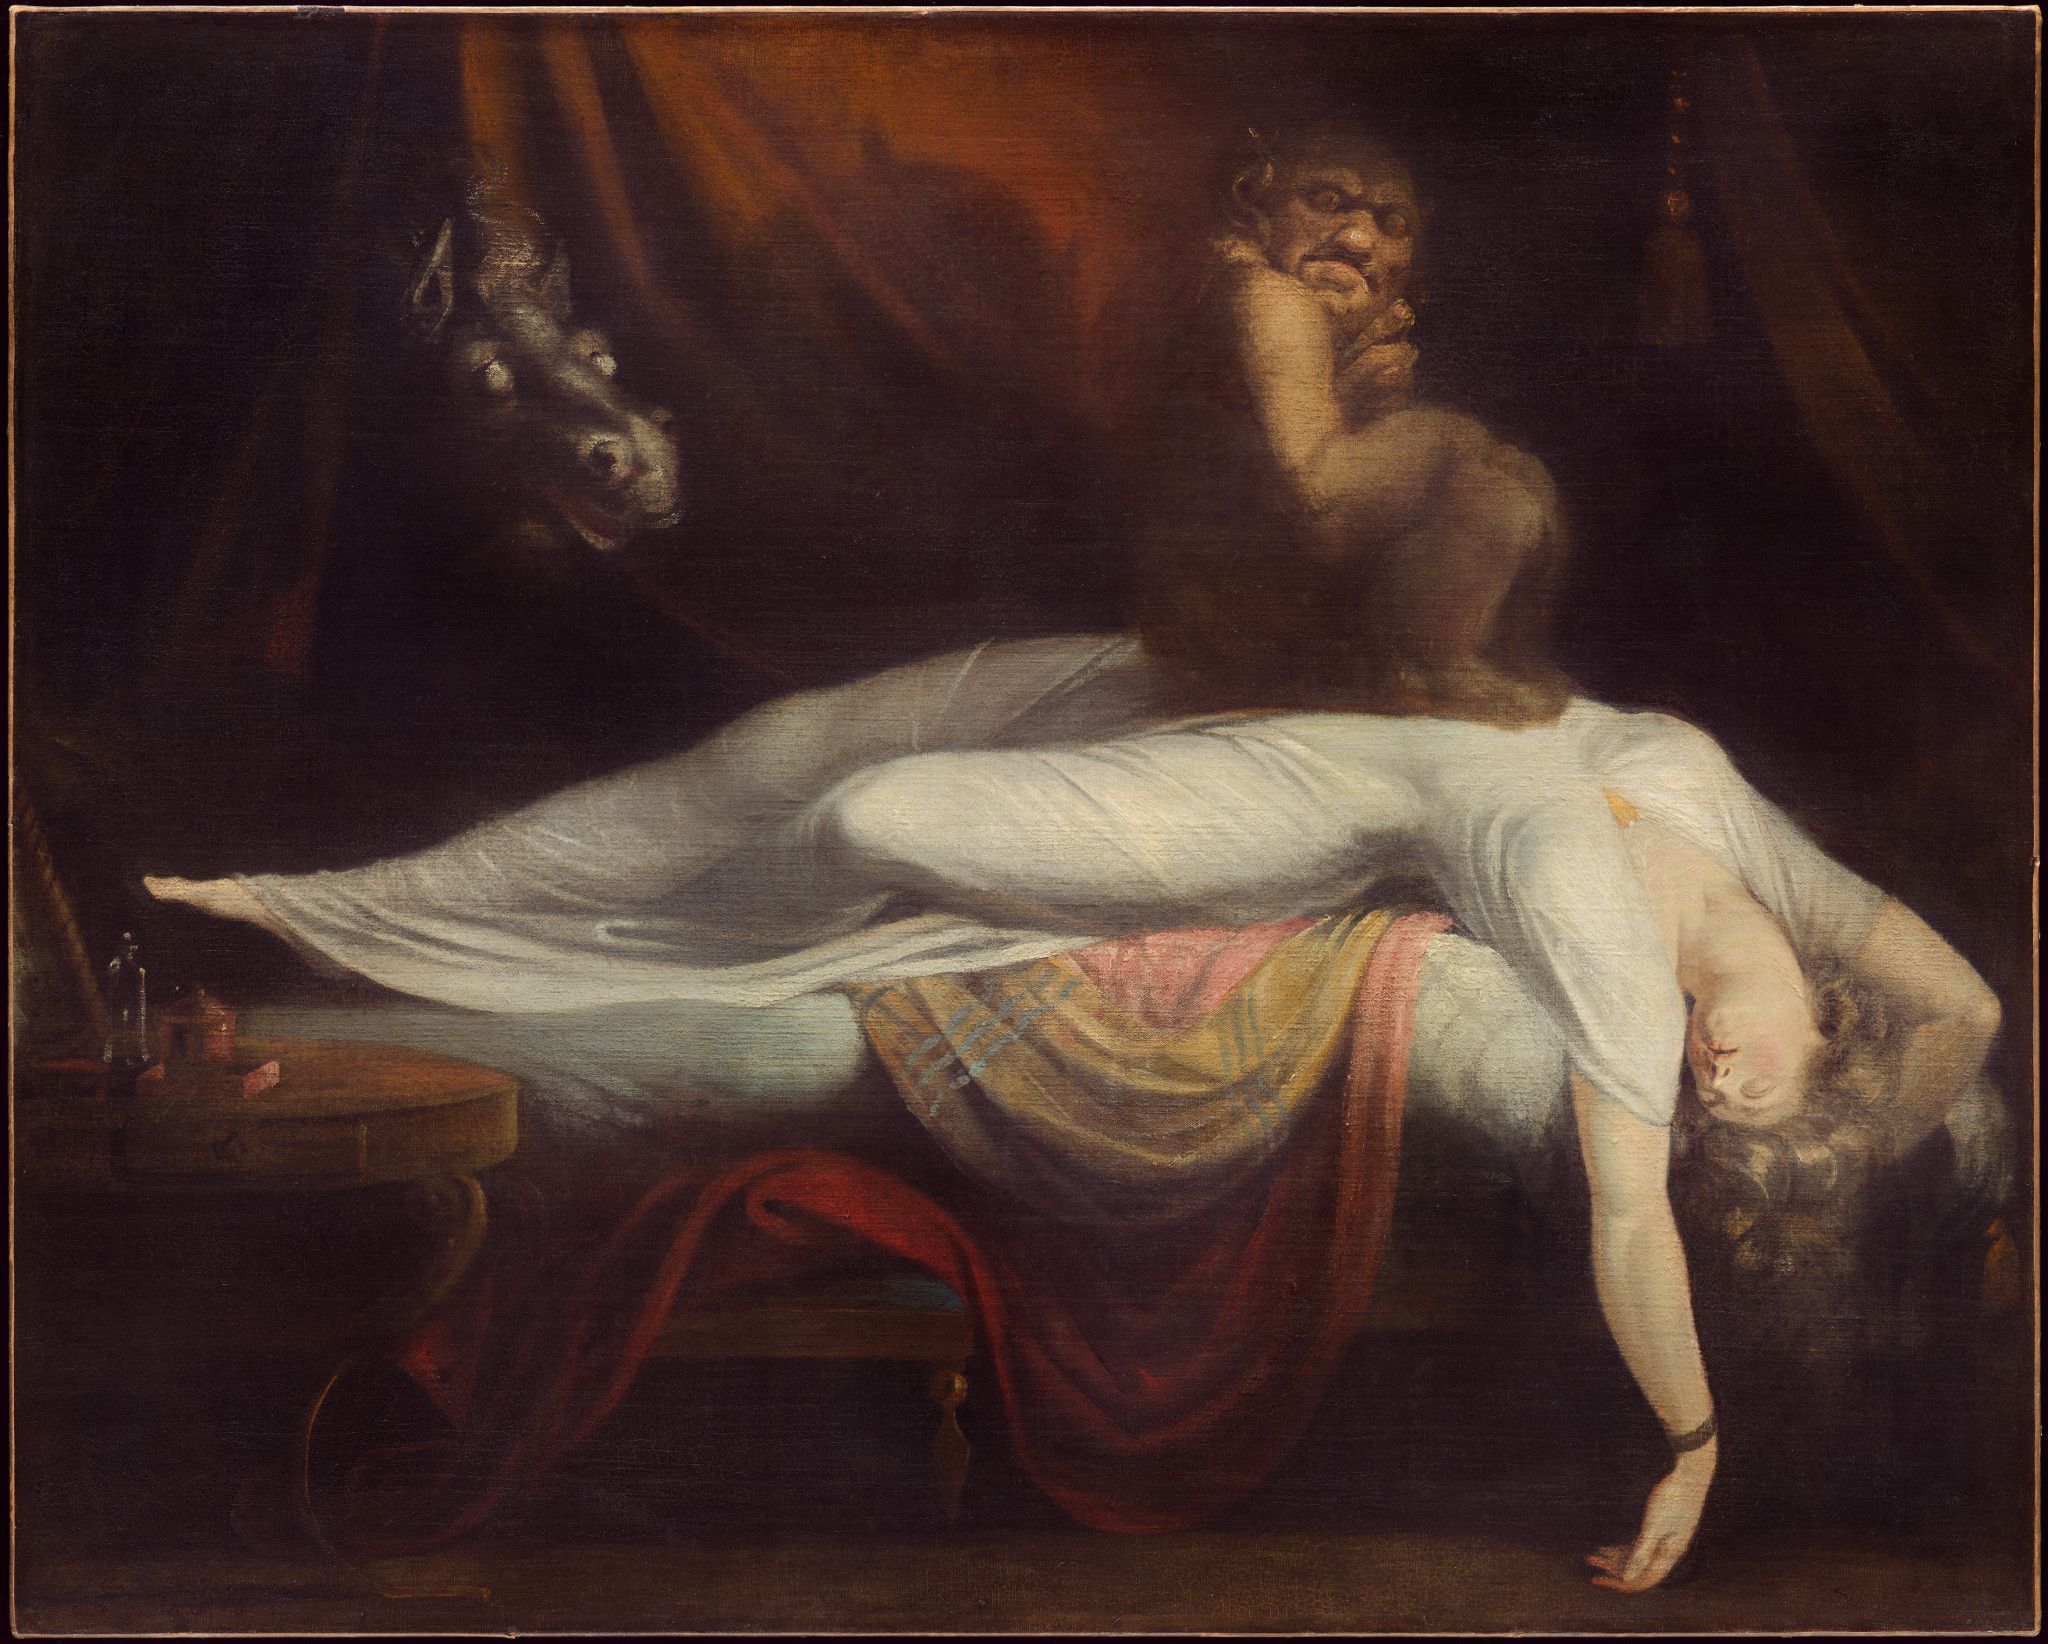 Henry Fuseli's The Nightmare, 1781 oil on canvas